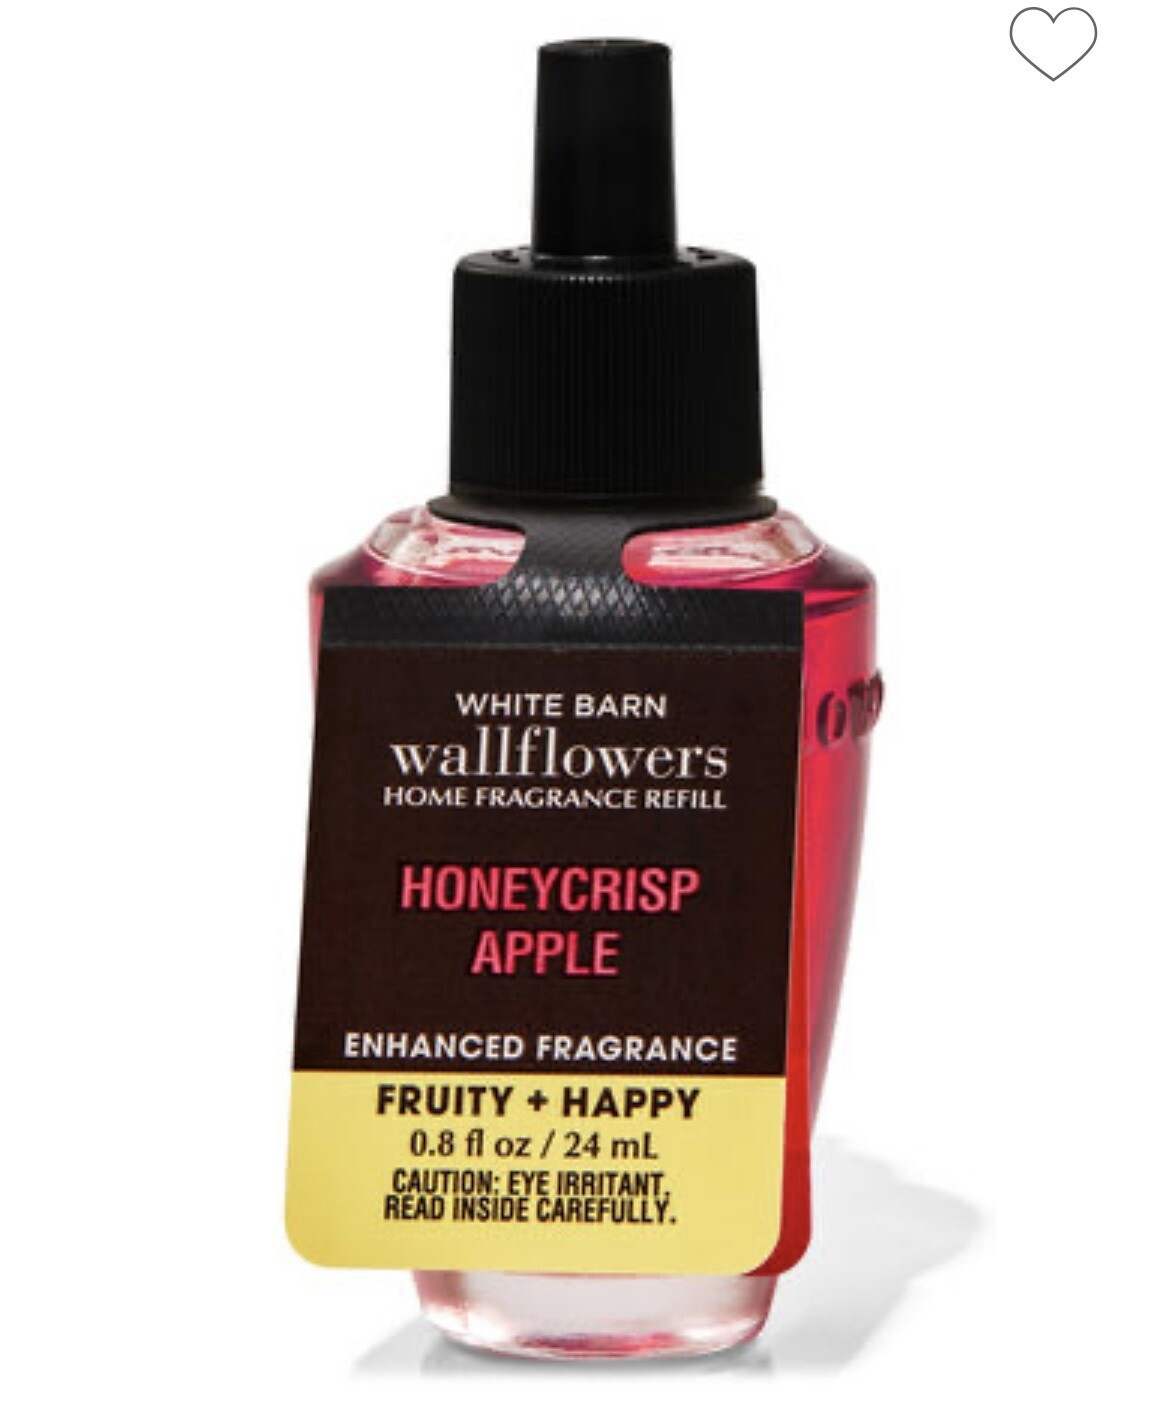 Wallflower Double Refill Honeycrisp Apple